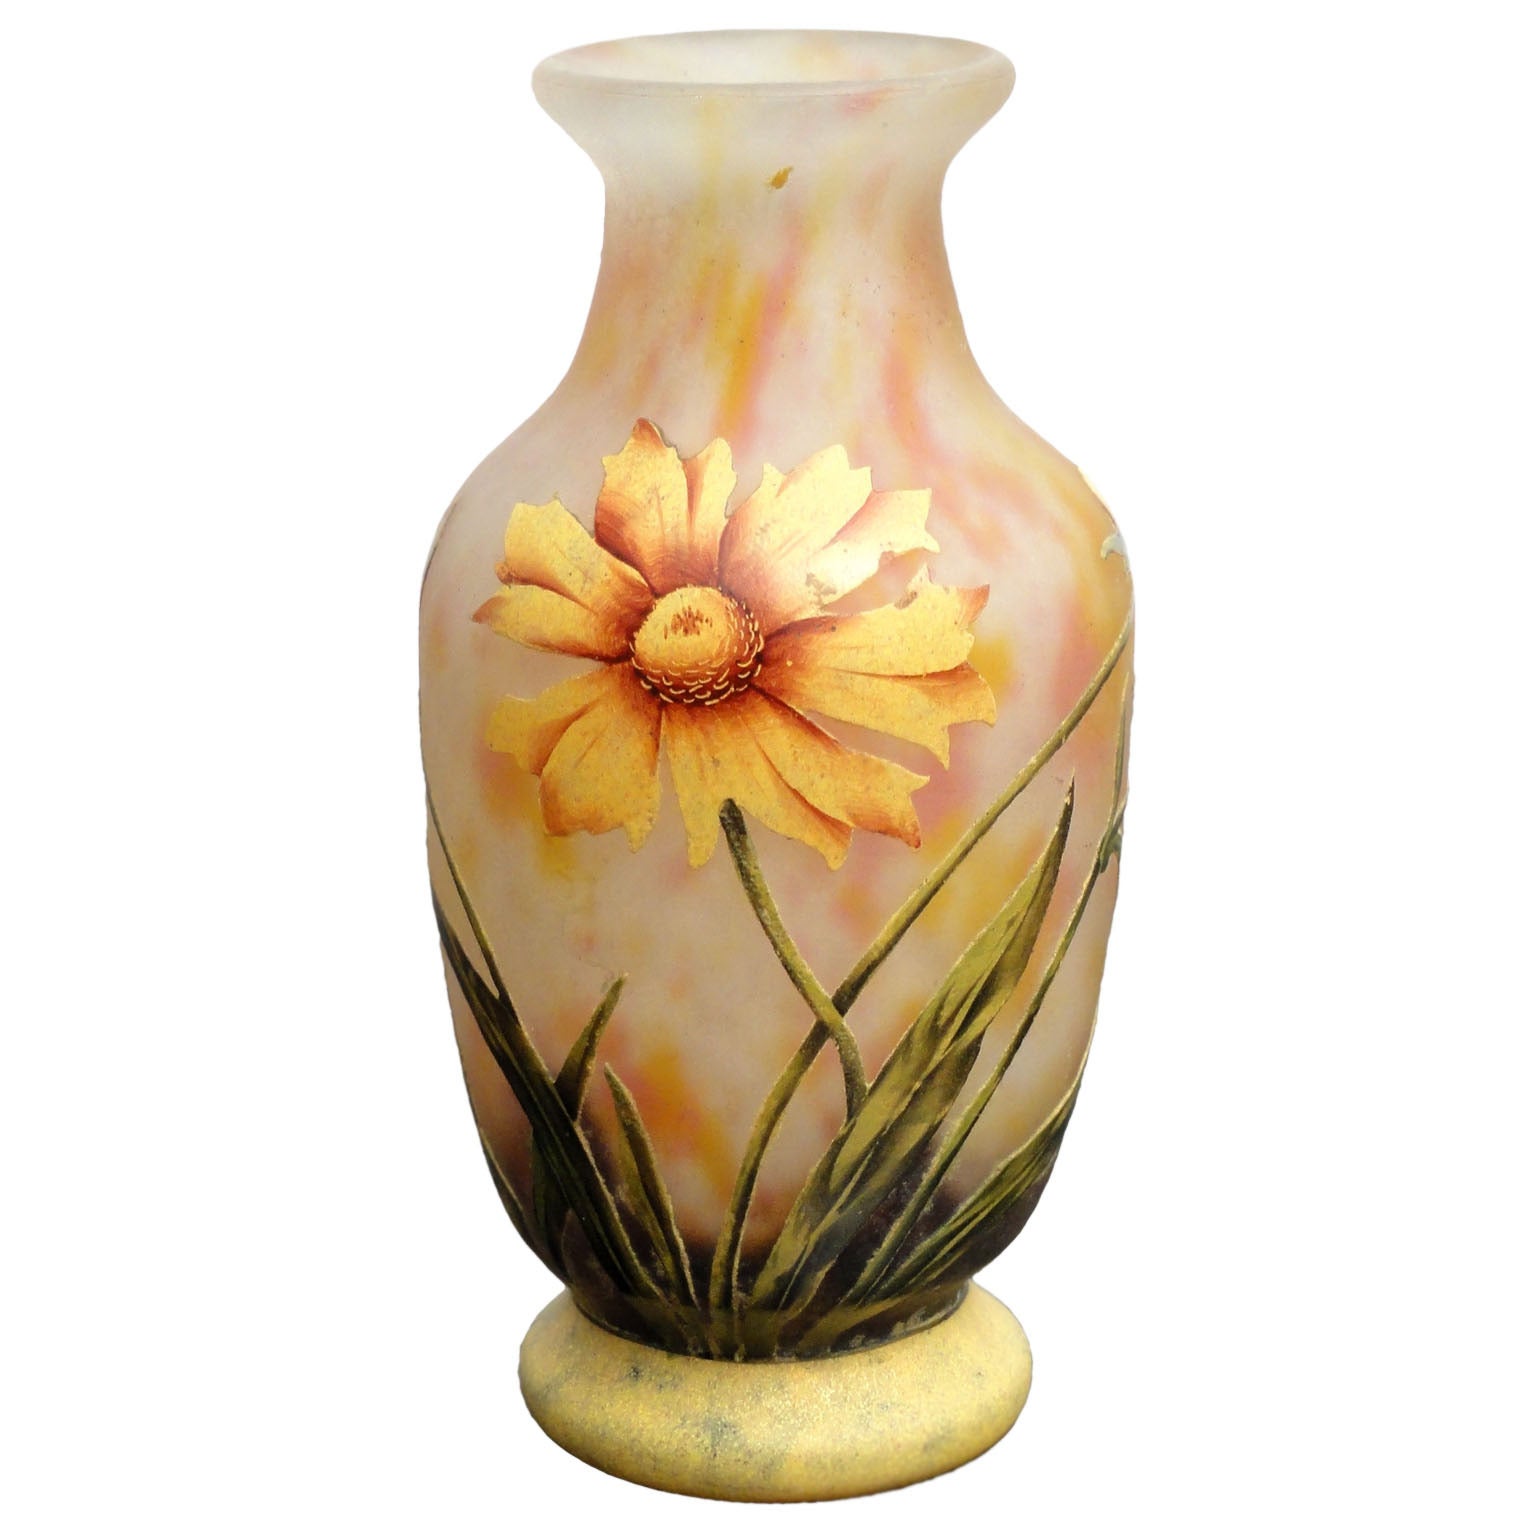 Very Fine "Marguerite" Vase by Daum Freres, Nancy, France